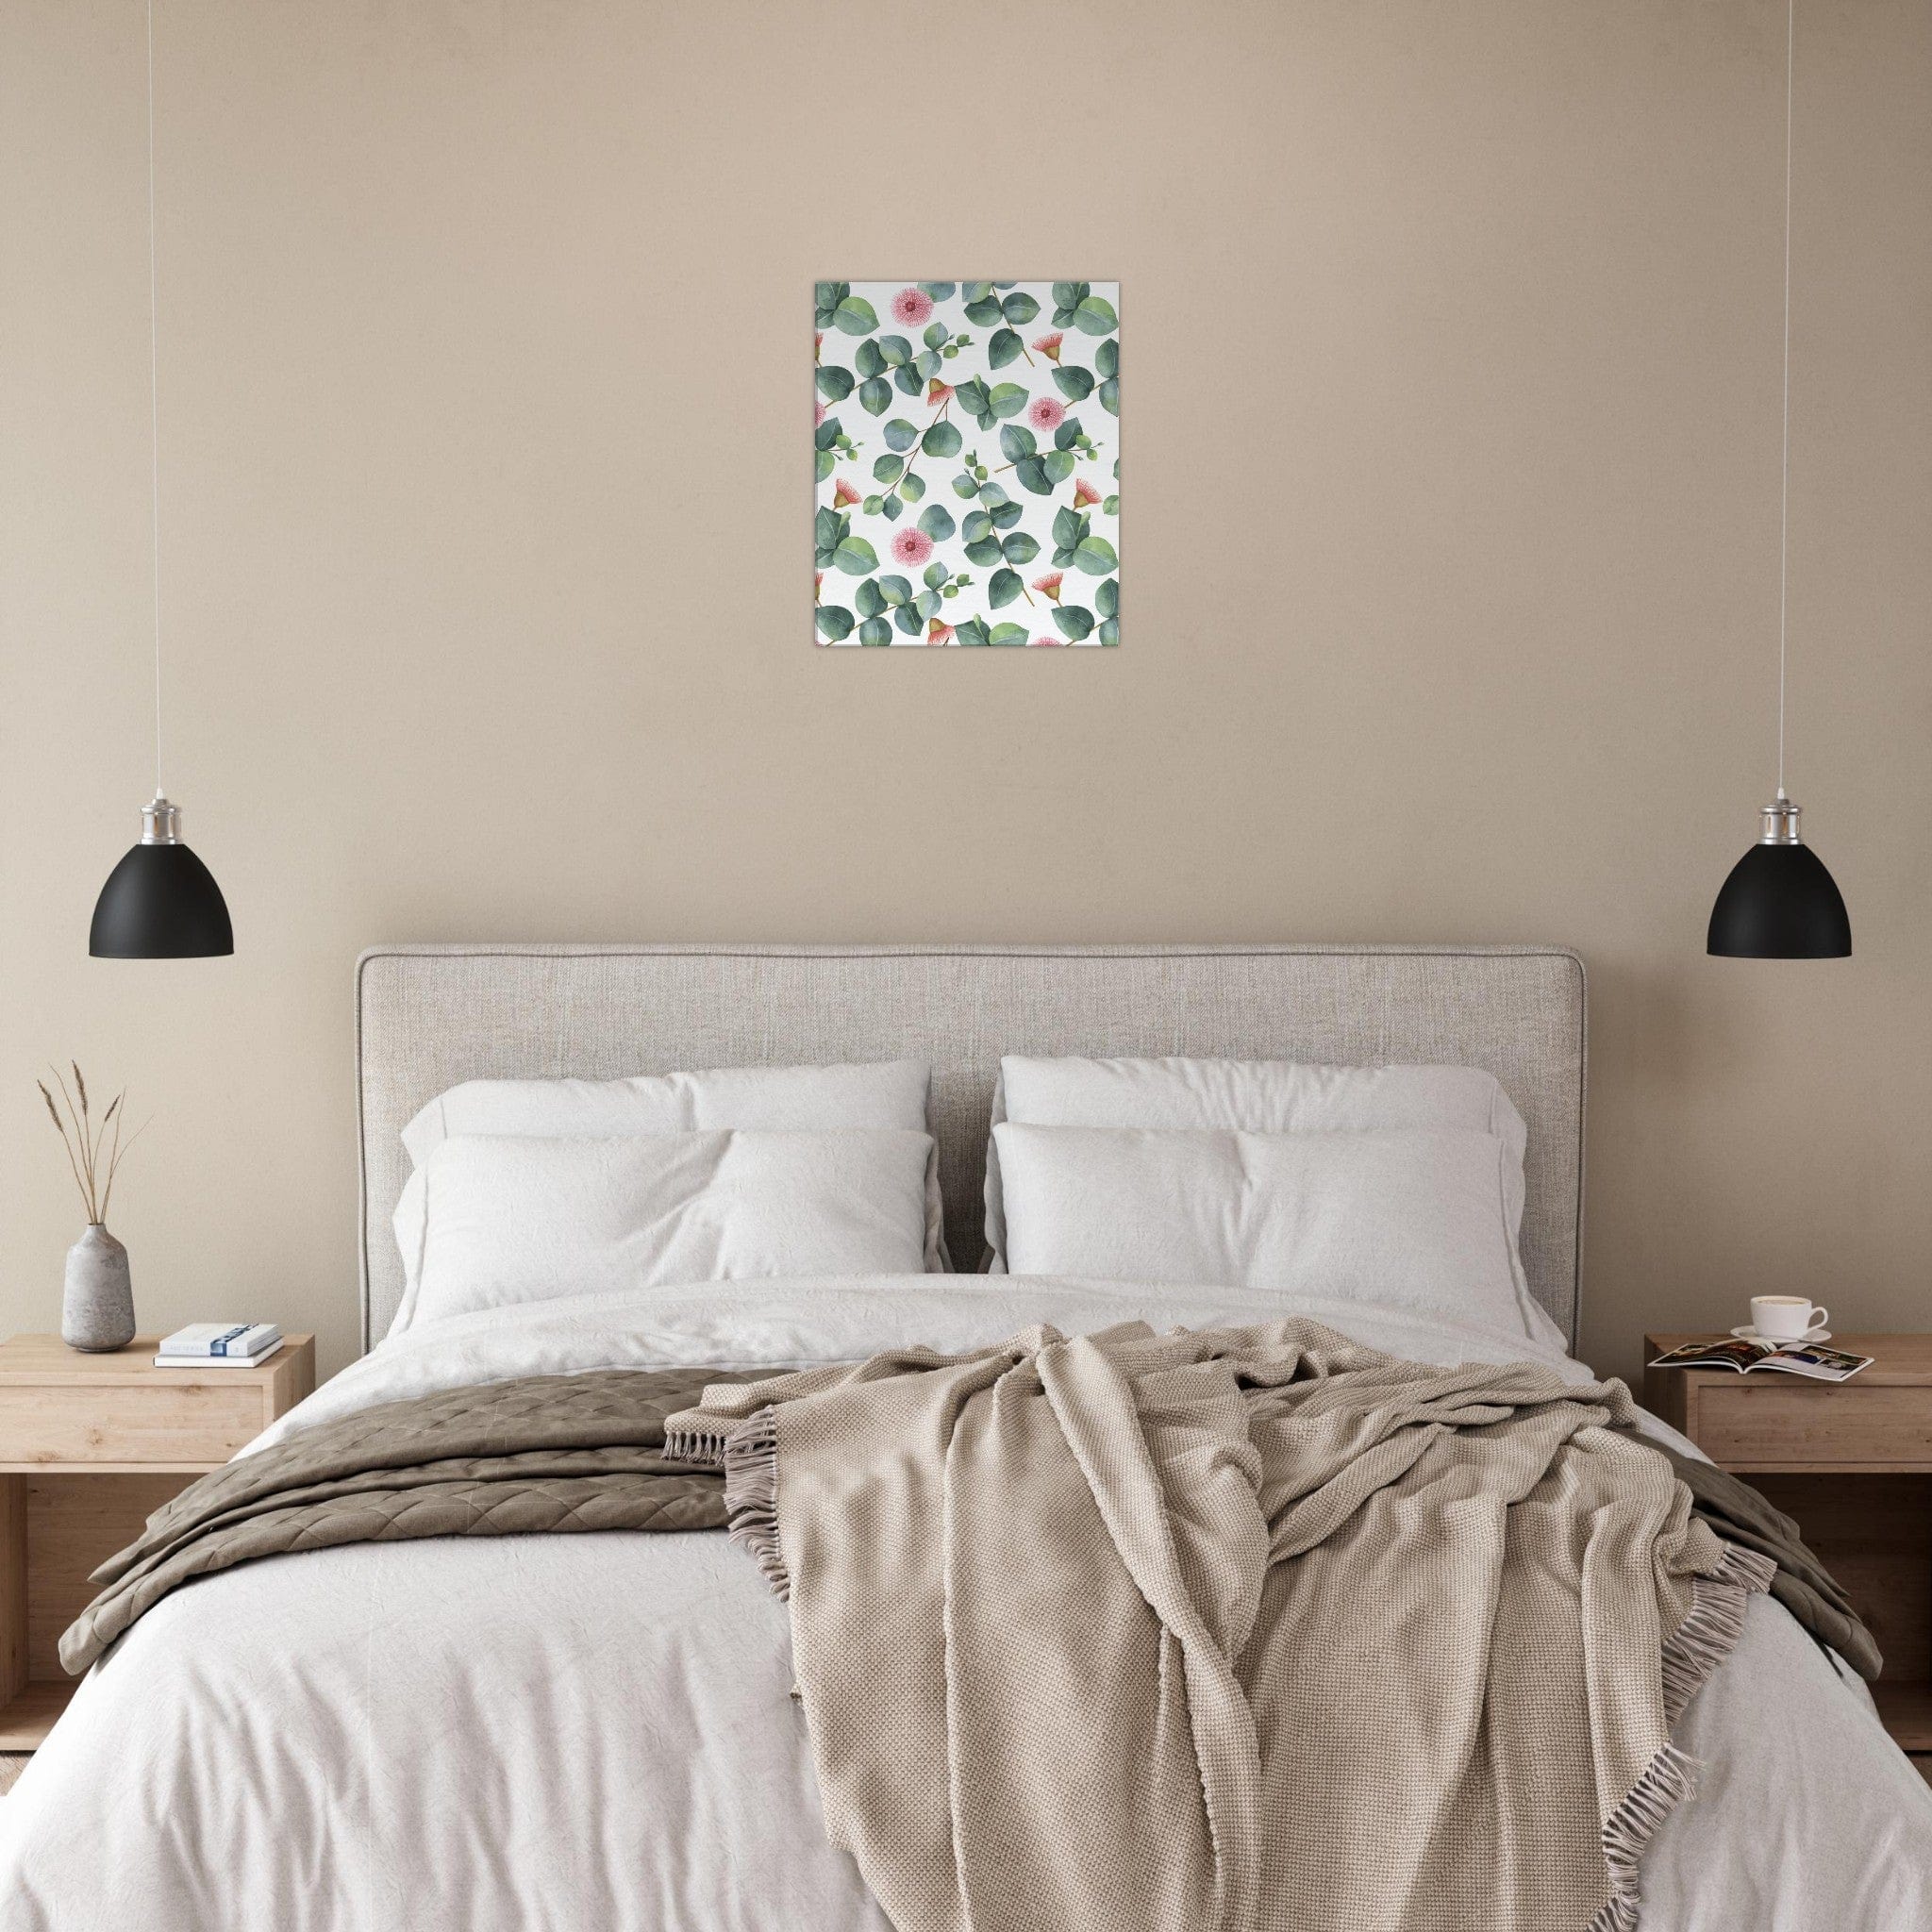 Little Squiffy Print Material 50x60 cm / 20x24″ / Vertical Eucalyptus Blossom Canvas Wall Art